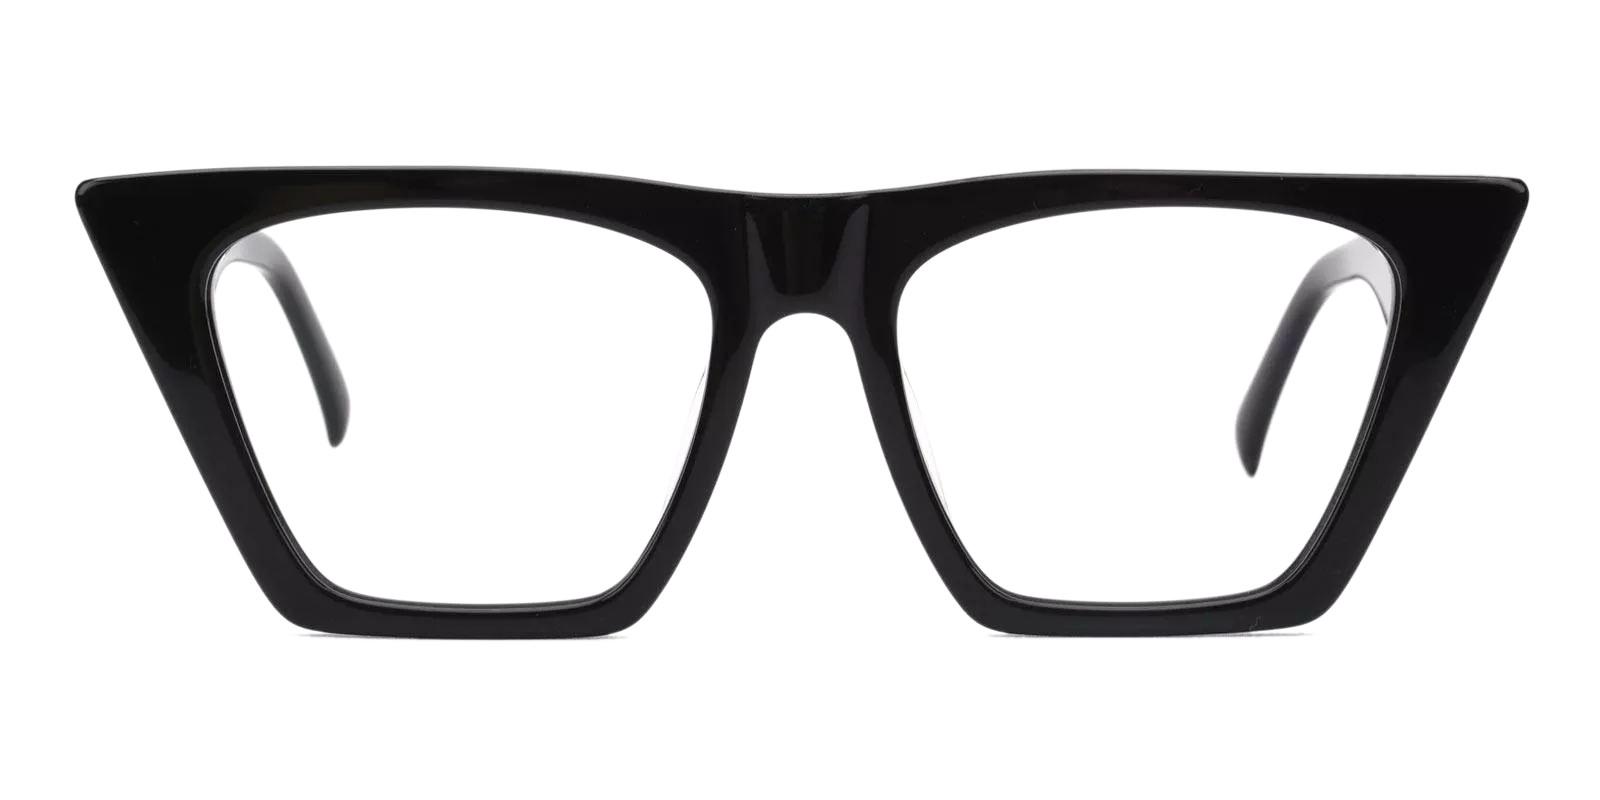 Haley Black Acetate Eyeglasses , Fashion , UniversalBridgeFit Frames from ABBE Glasses